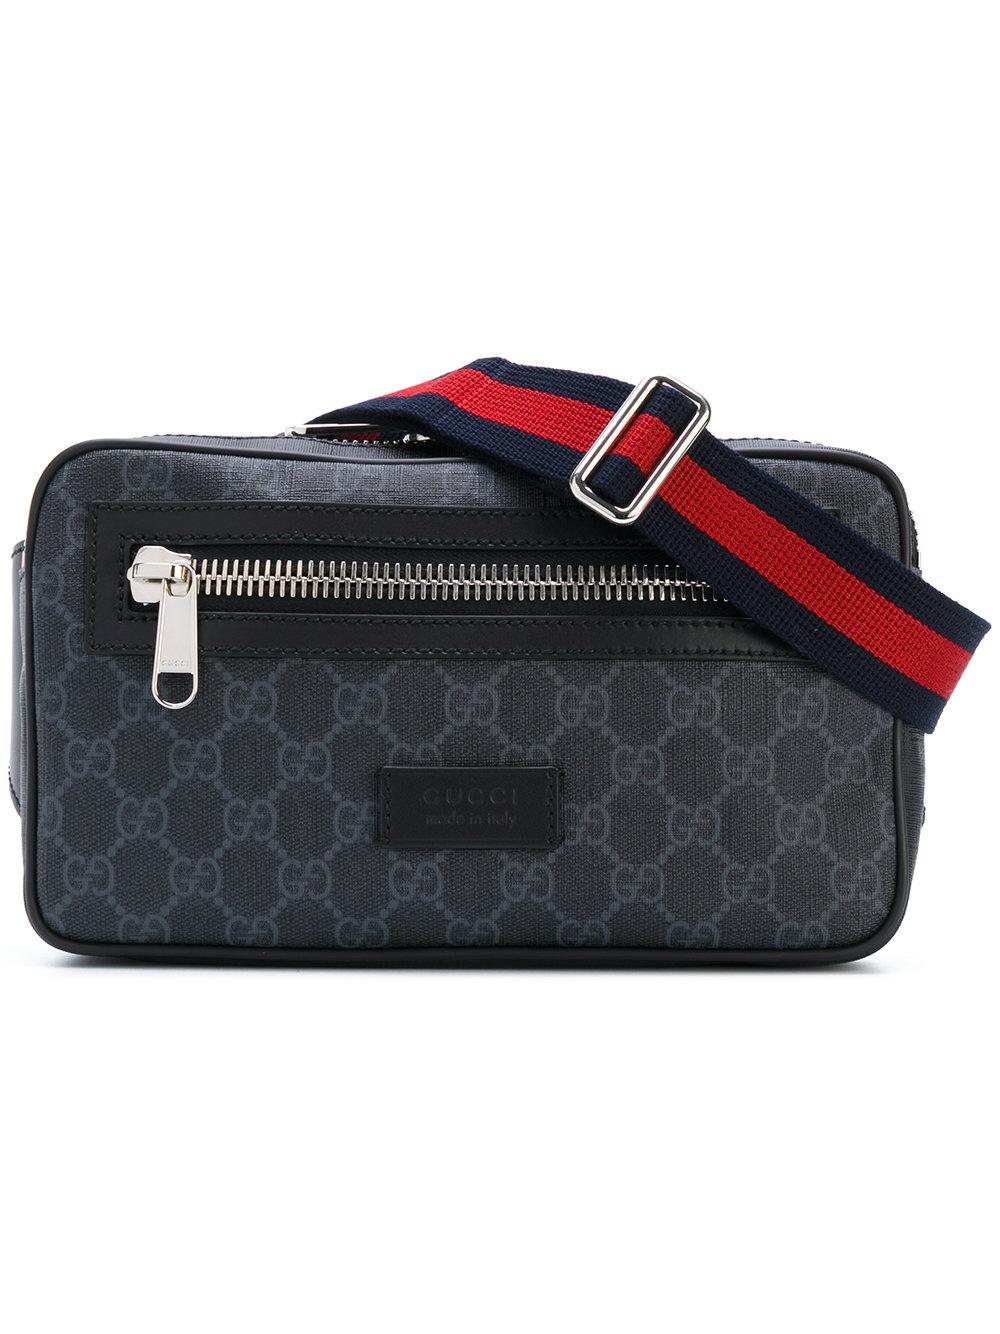 Gucci Cotton Gg Supreme Belt Bag in Blue - Lyst